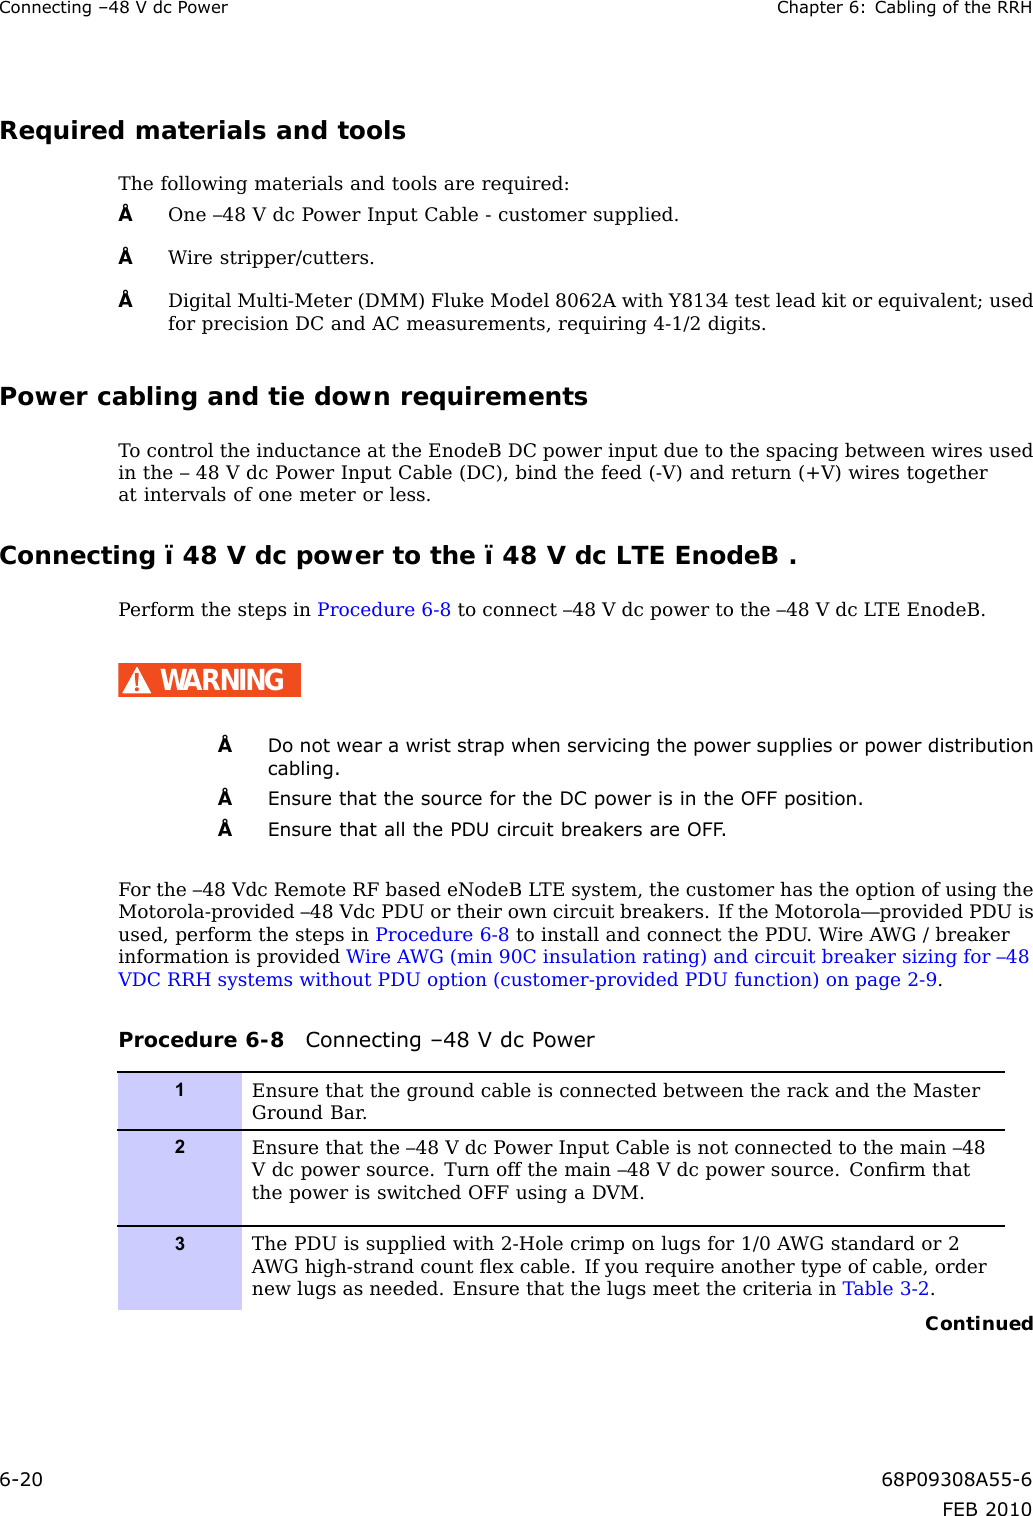 Connecting–48VdcPowerChapter6:CablingoftheRRHRequiredmaterialsandtoolsThefollowingmaterialsandtoolsarerequired:•One–48VdcPowerInputCable-customersupplied.•Wirestripper/cutters.•DigitalMulti-Meter(DMM)FlukeModel8062AwithY8134testleadkitorequivalent;usedforprecisionDCandACmeasurements,requiring4-1/2digits.PowercablingandtiedownrequirementsTocontroltheinductanceattheEnodeBDCpowerinputduetothespacingbetweenwiresusedinthe–48VdcPowerInputCable(DC),bindthefeed(-V)andreturn(+V)wirestogetheratintervalsofonemeterorless.Connecting–48Vdcpowertothe–48VdcLTEEnodeB.PerformthestepsinProcedure6-8toconnect–48Vdcpowertothe–48VdcLTEEnodeB.WARNING•Donotwearawriststrapwhenservicingthepowersuppliesorpowerdistributioncabling.•EnsurethatthesourcefortheDCpowerisintheOFFposition.•EnsurethatallthePDUcircuitbreakersareOFF .Forthe–48VdcRemoteRFbasedeNodeBLTEsystem,thecustomerhastheoptionofusingtheMotorola-provided–48VdcPDUortheirowncircuitbreakers.IftheMotorola—providedPDUisused,performthestepsinProcedure6-8toinstallandconnectthePDU.WireAWG/breakerinformationisprovidedWireAWG(min90Cinsulationrating)andcircuitbreakersizingfor–48VDCRRHsystemswithoutPDUoption(customer-providedPDUfunction)onpage2-9.Procedure6-8Connecting–48VdcPower1EnsurethatthegroundcableisconnectedbetweentherackandtheMasterGroundBar.2Ensurethatthe–48VdcPowerInputCableisnotconnectedtothemain–48Vdcpowersource.Turnoffthemain–48Vdcpowersource.ConrmthatthepowerisswitchedOFFusingaDVM.3ThePDUissuppliedwith2-Holecrimponlugsfor1/0AWGstandardor2AWGhigh-strandcountexcable.Ifyourequireanothertypeofcable,ordernewlugsasneeded.EnsurethatthelugsmeetthecriteriainTable3-2.Continued6-2068P09308A55-6FEB2010